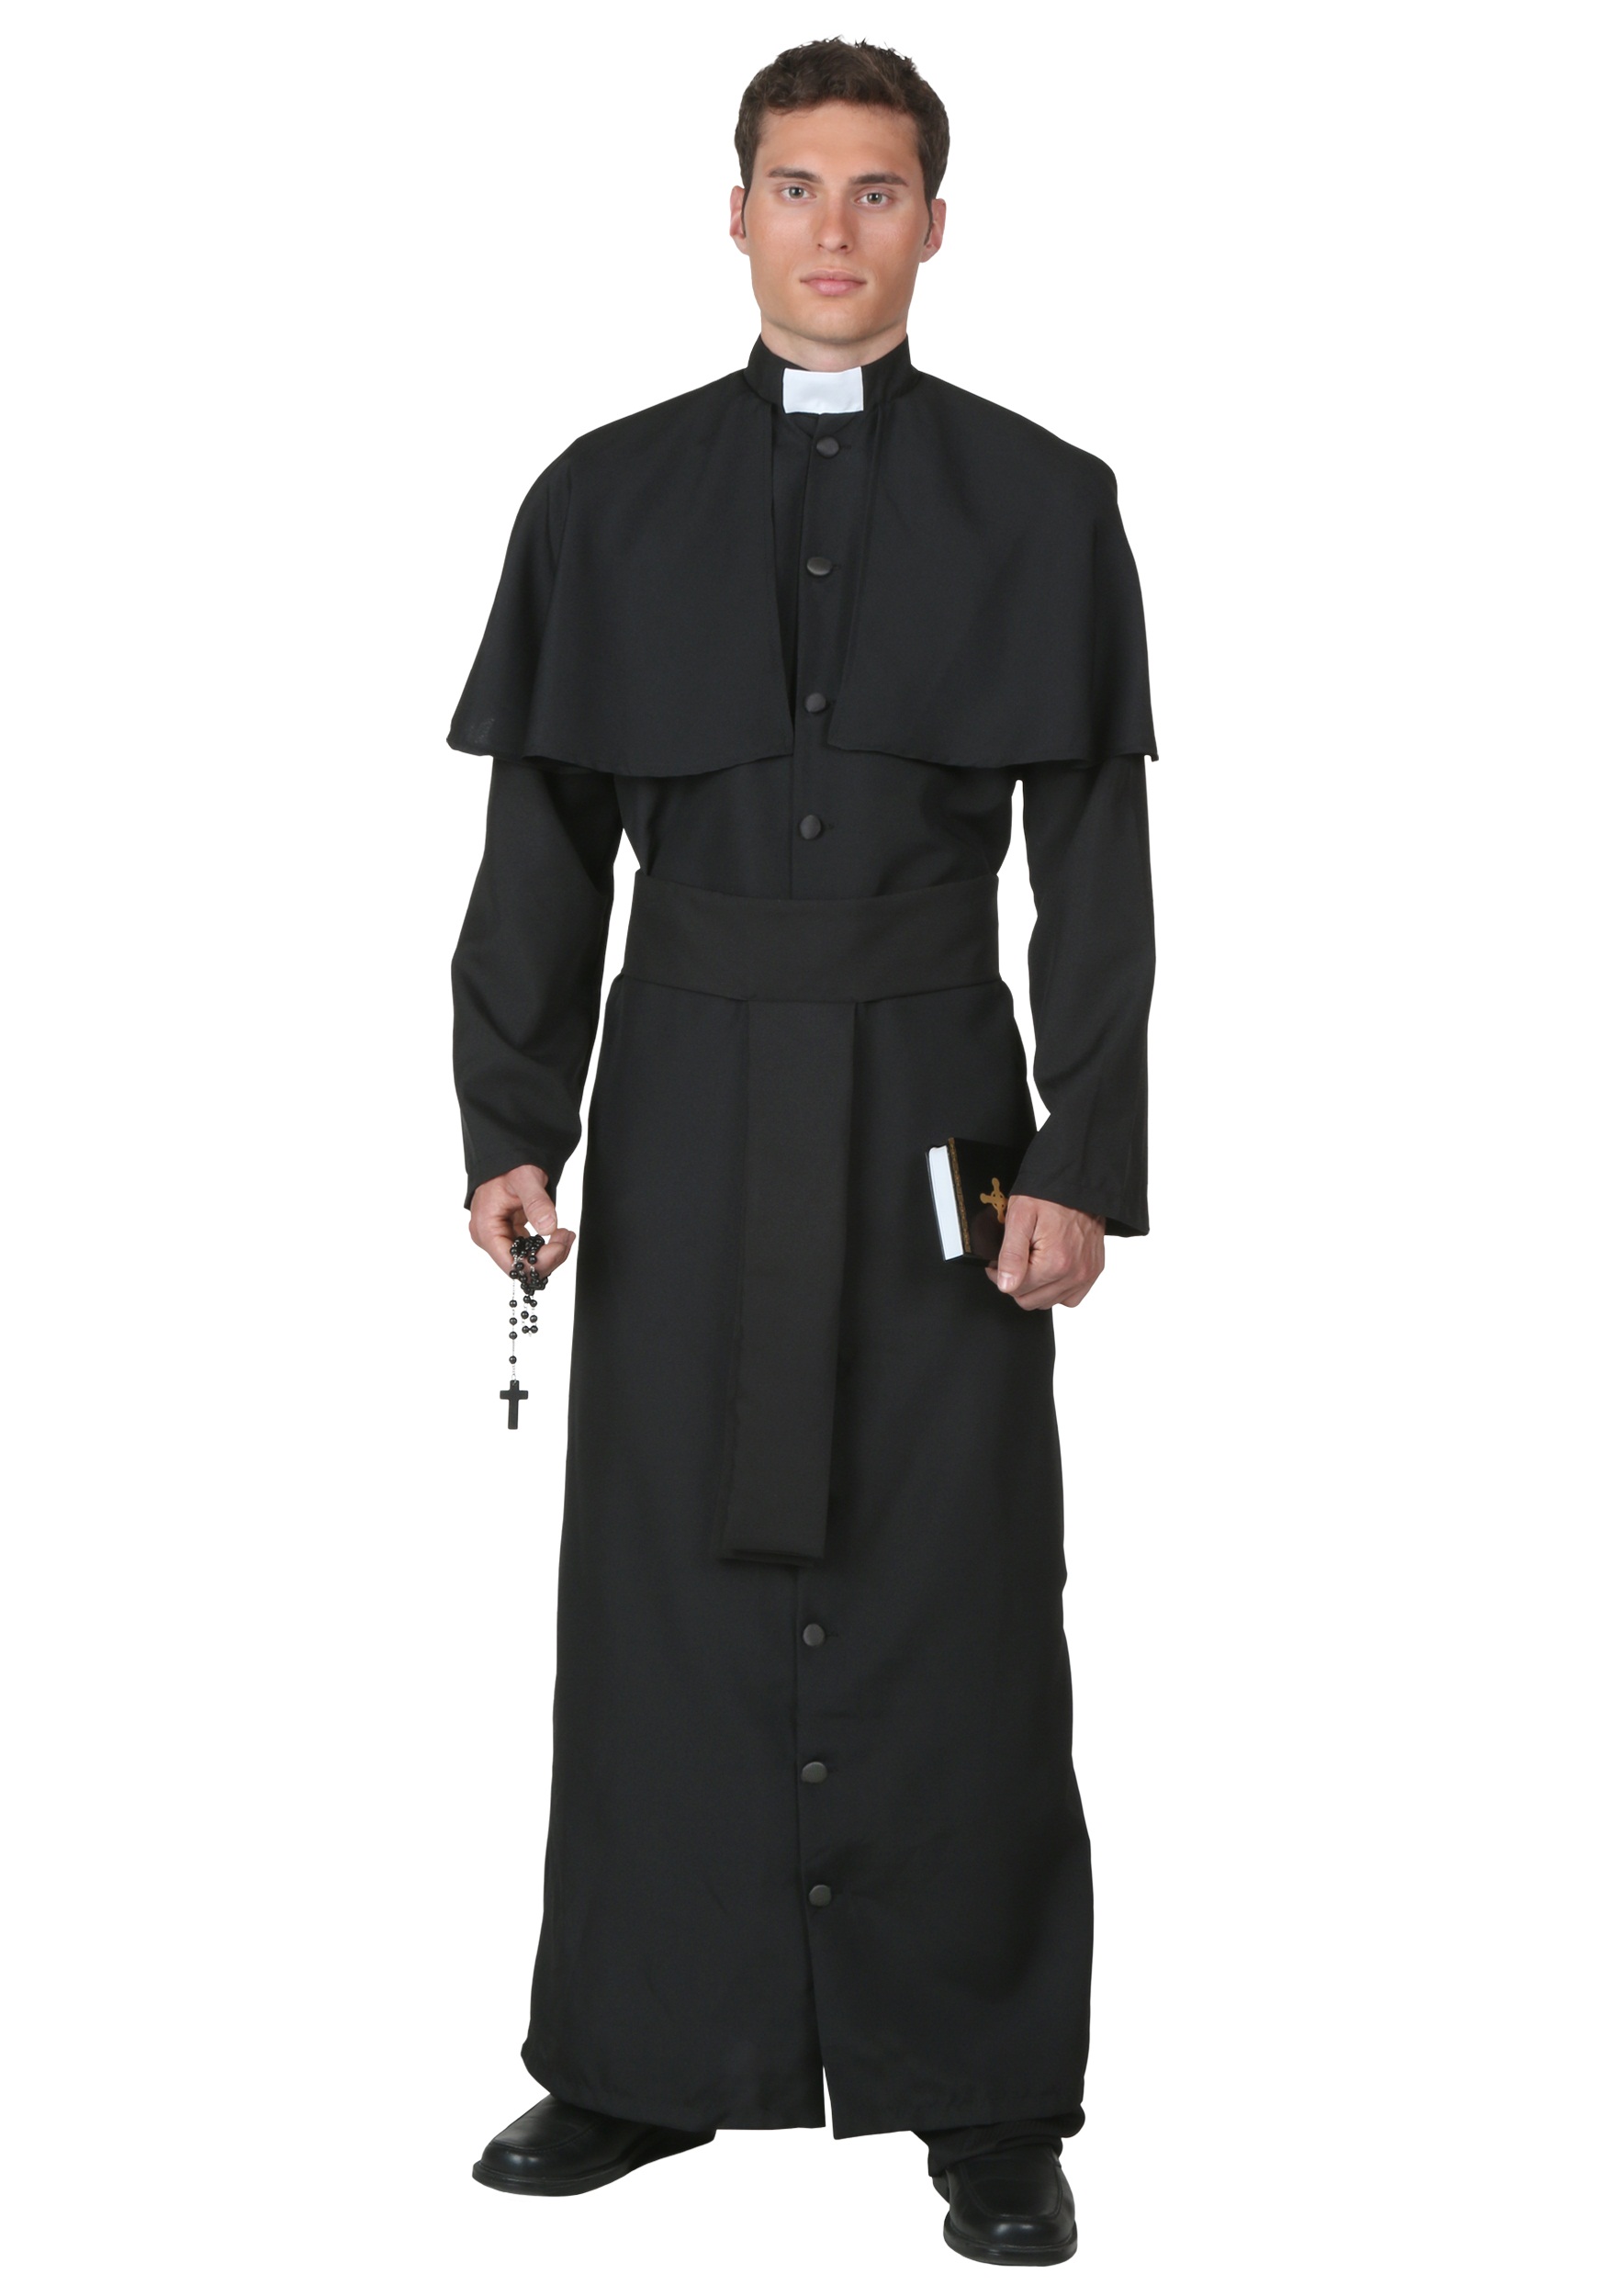 Deluxe Priest Costume - image 1 of 2